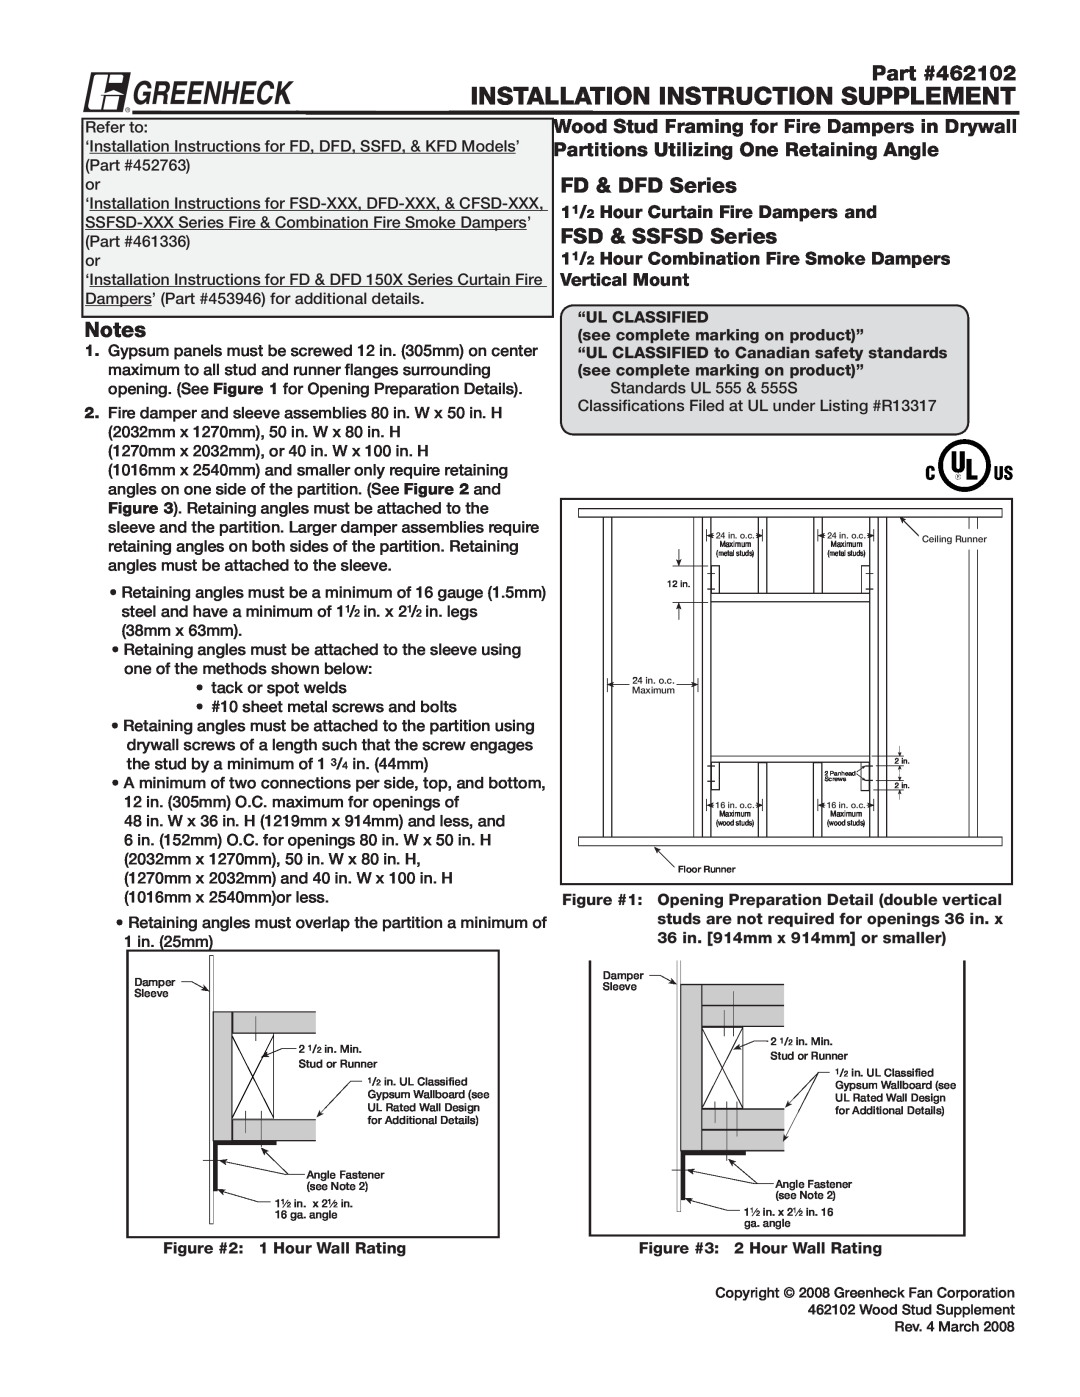 Greenheck Fan 462102 installation instructions Installation Instruction Supplement, FD & DFD Series, FSD & SSFSD Series 